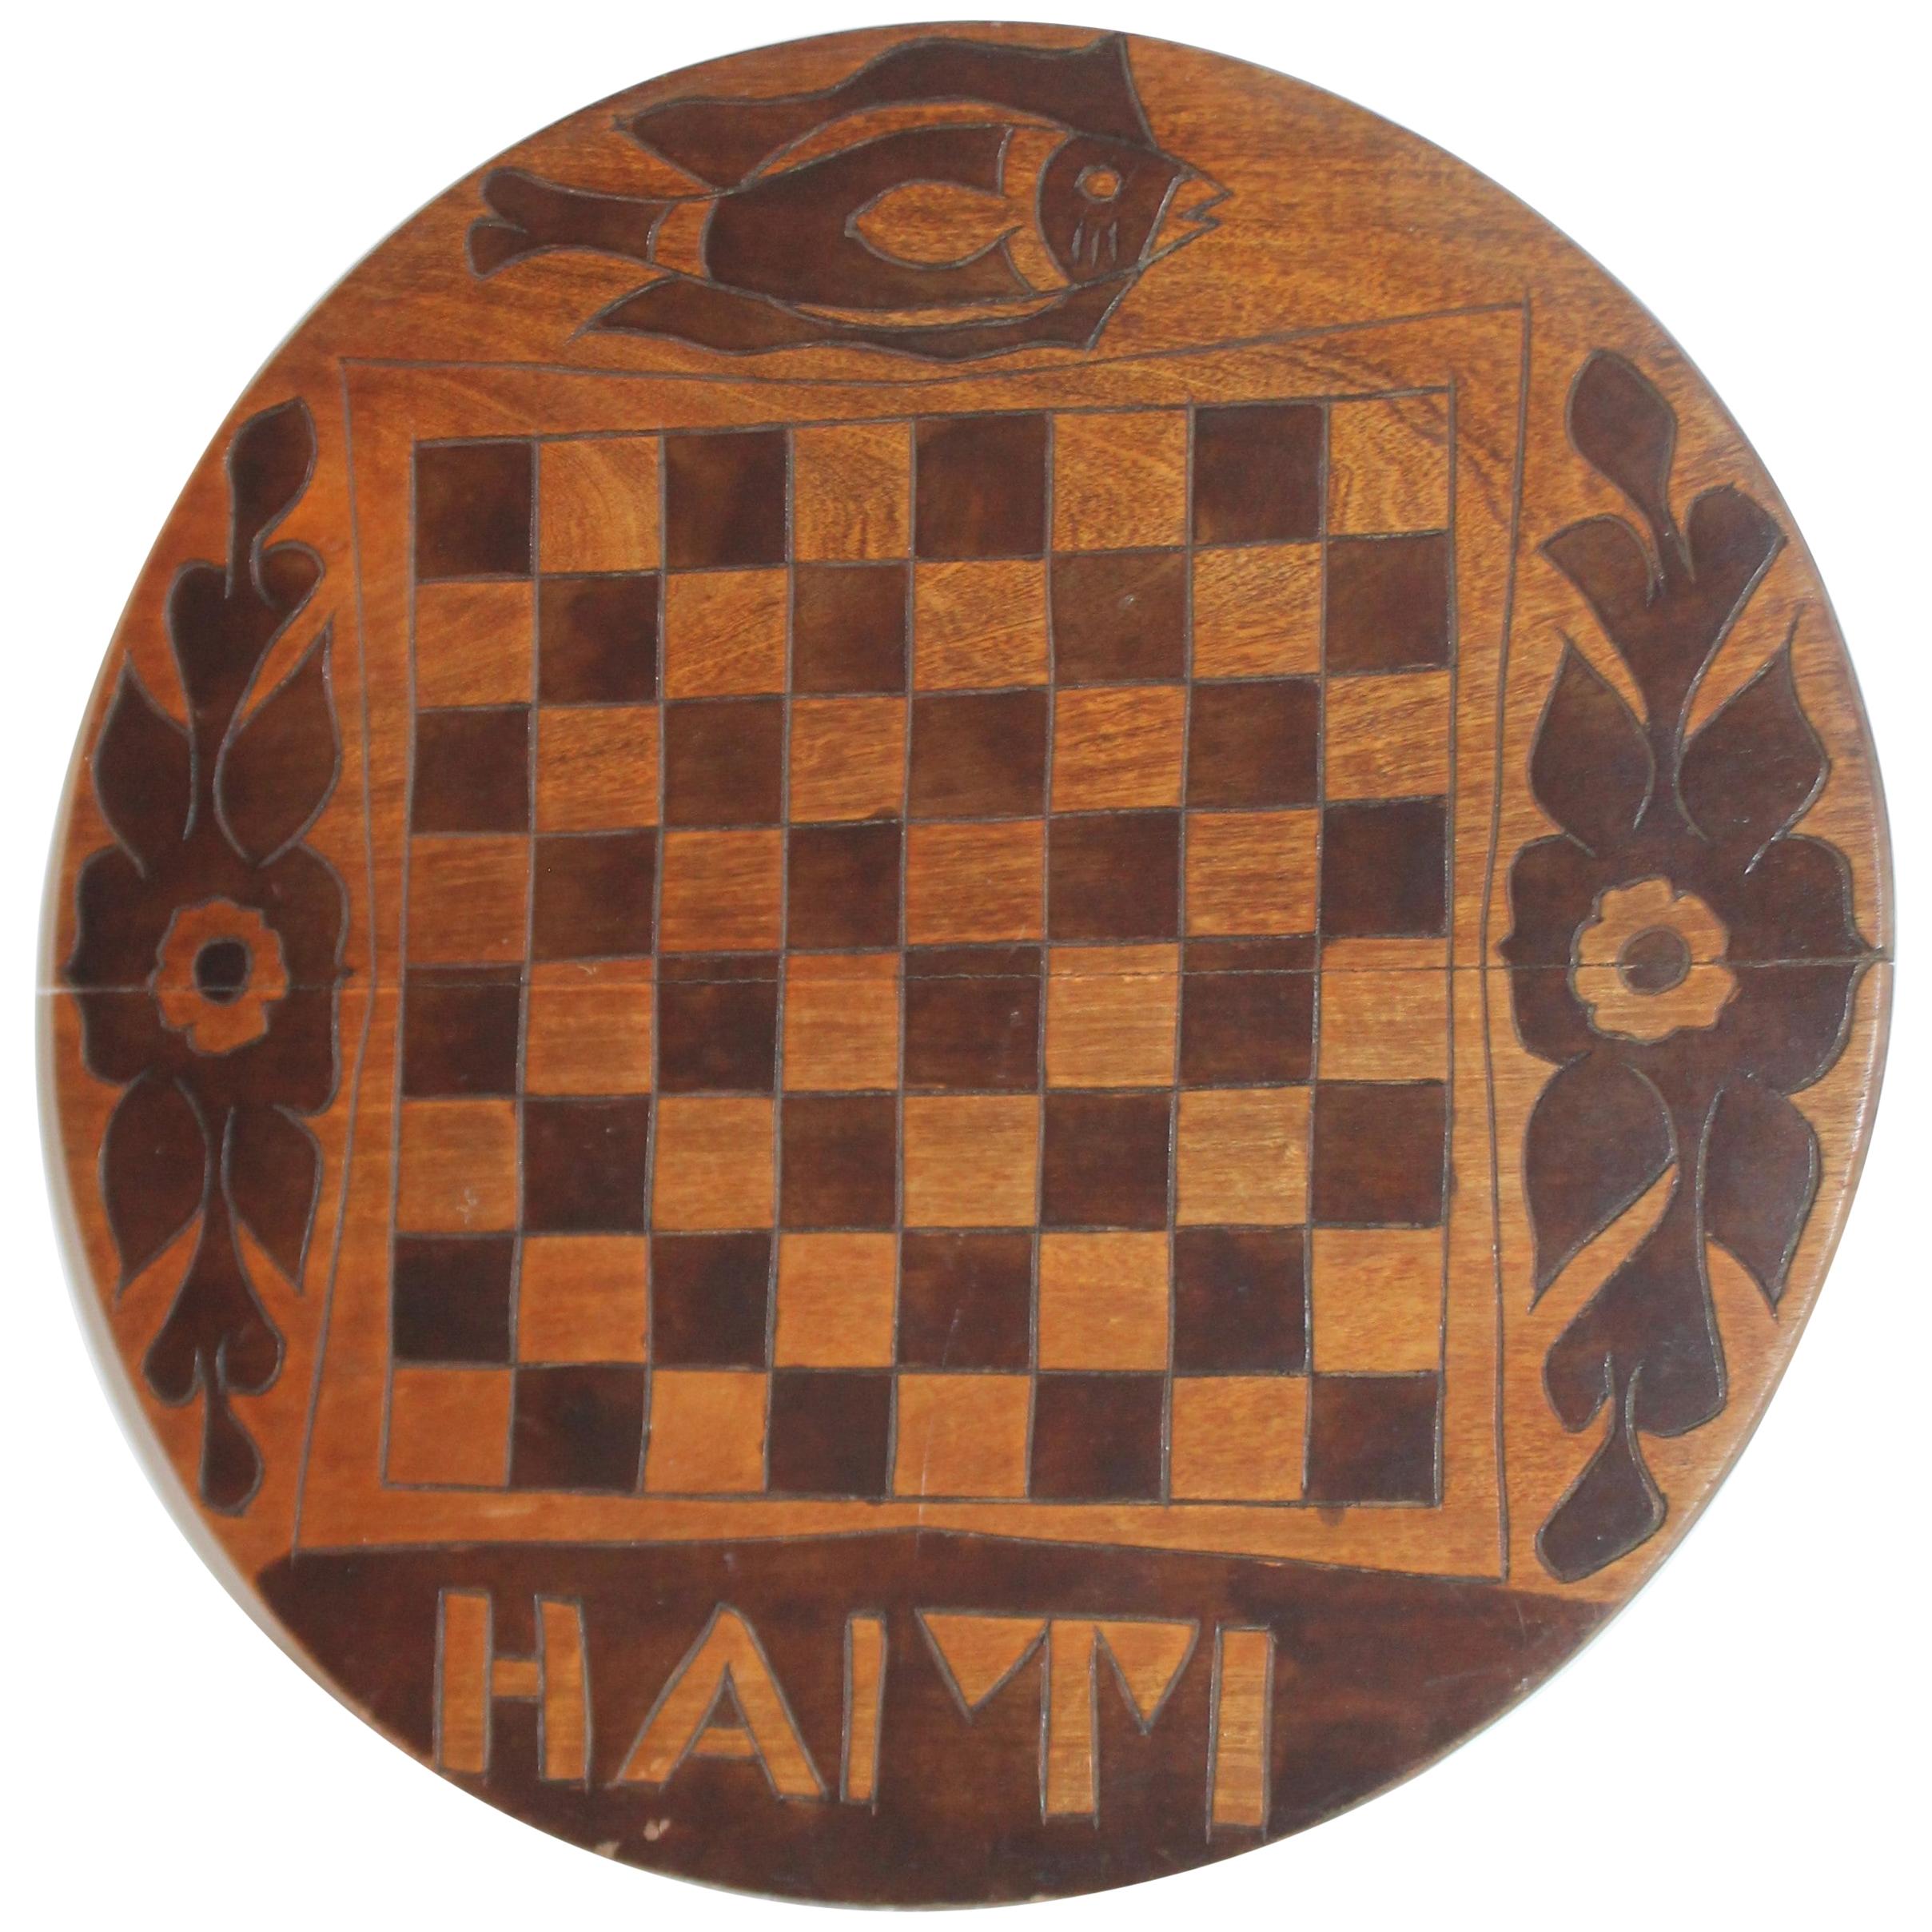 Round Folk Art Game Board From Haiti